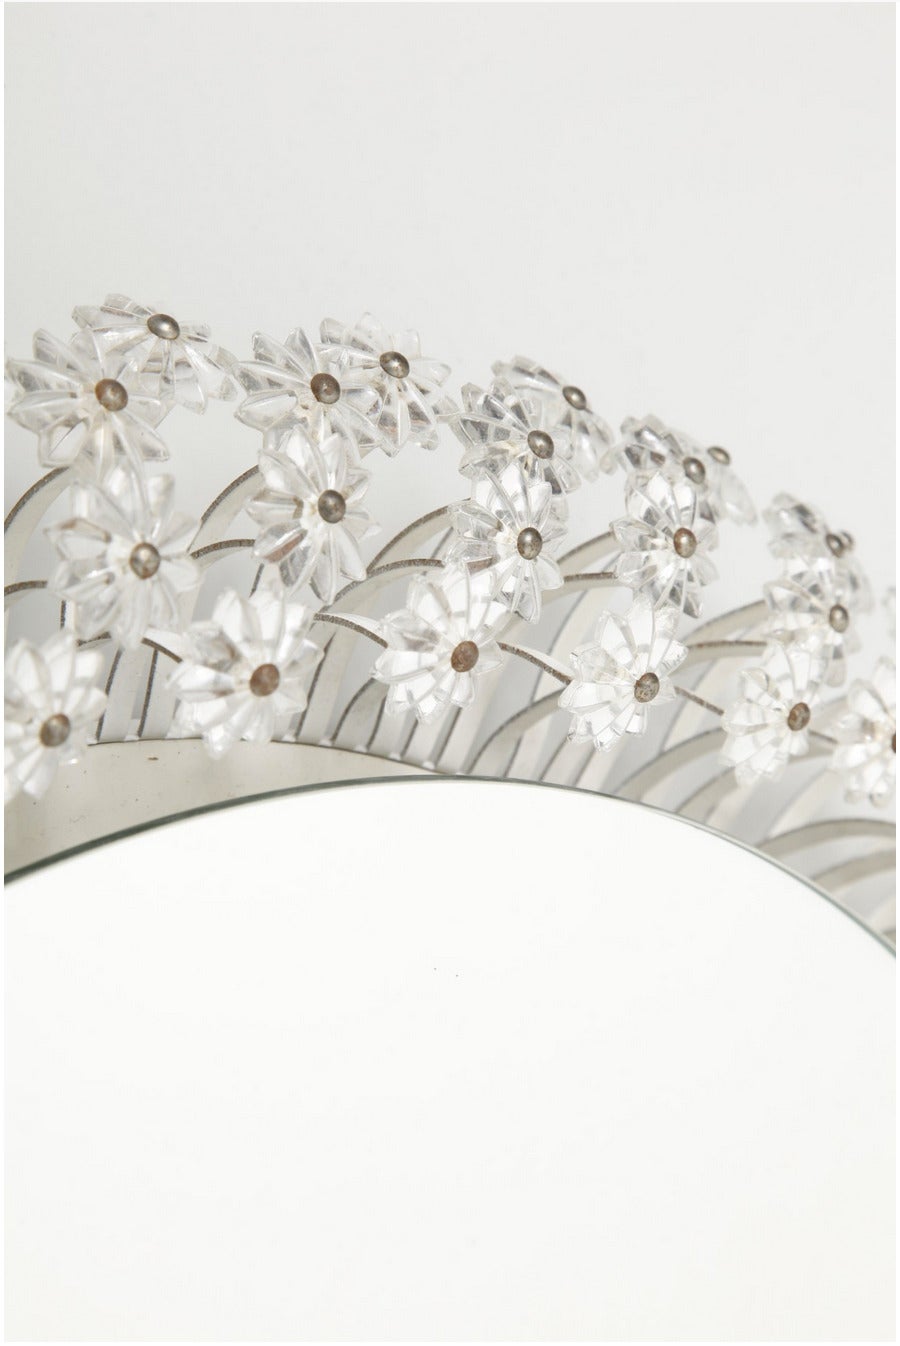 Mid-Century Modern Illuminated Flower Mirror by Emil Stejnar for Rupert Nikoll from 1950s For Sale